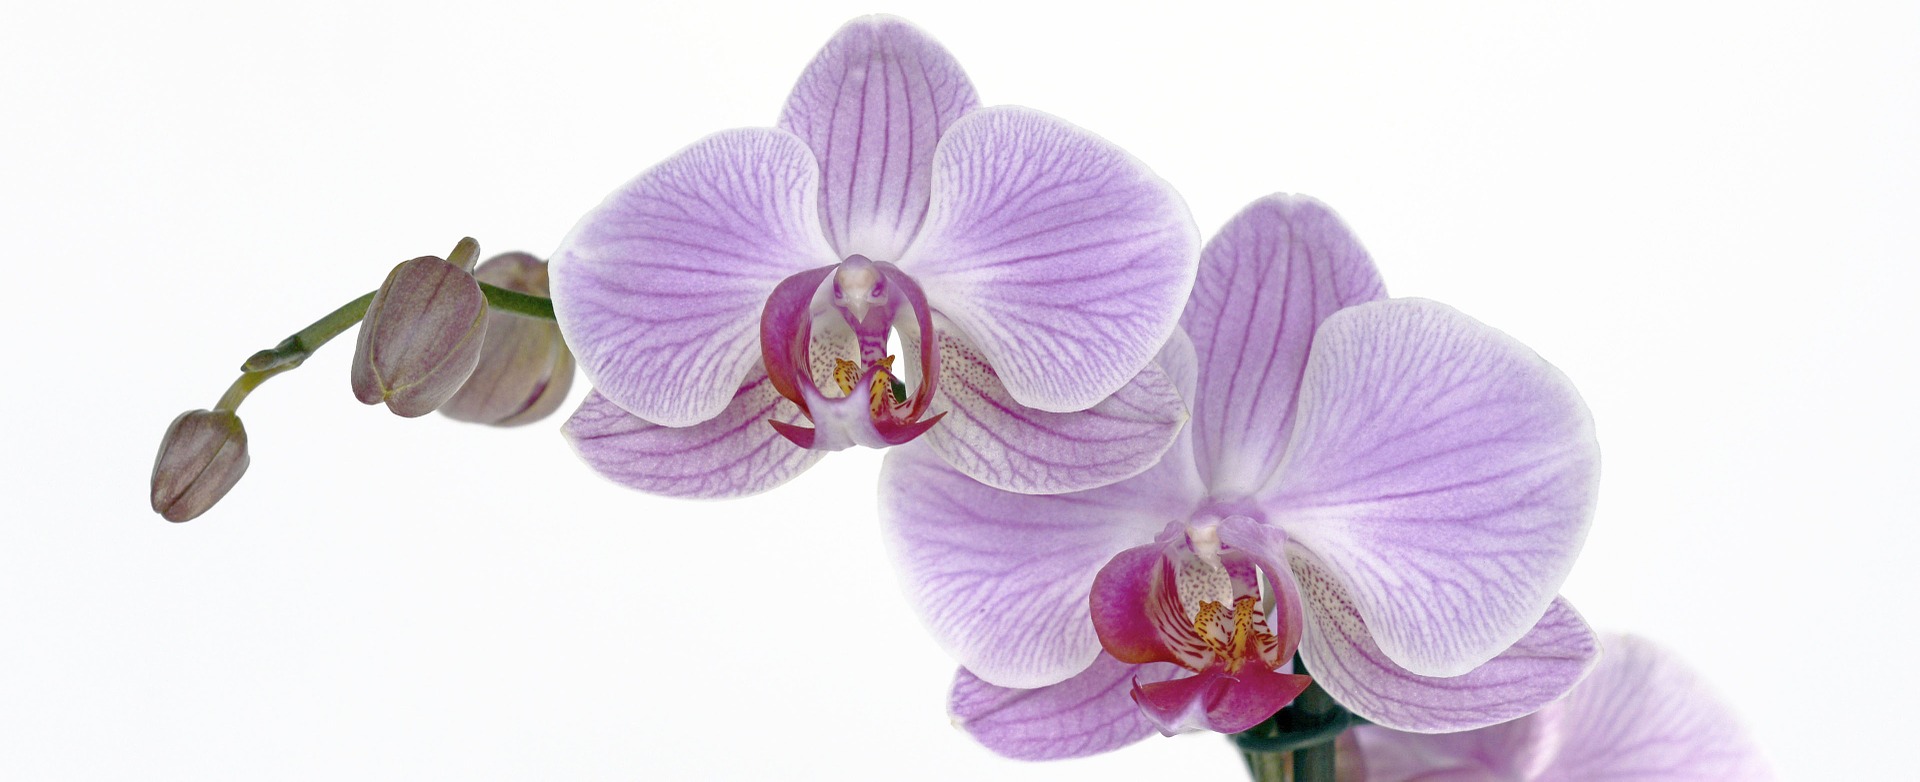 Phalaenopsis flower, annca/Pixabay